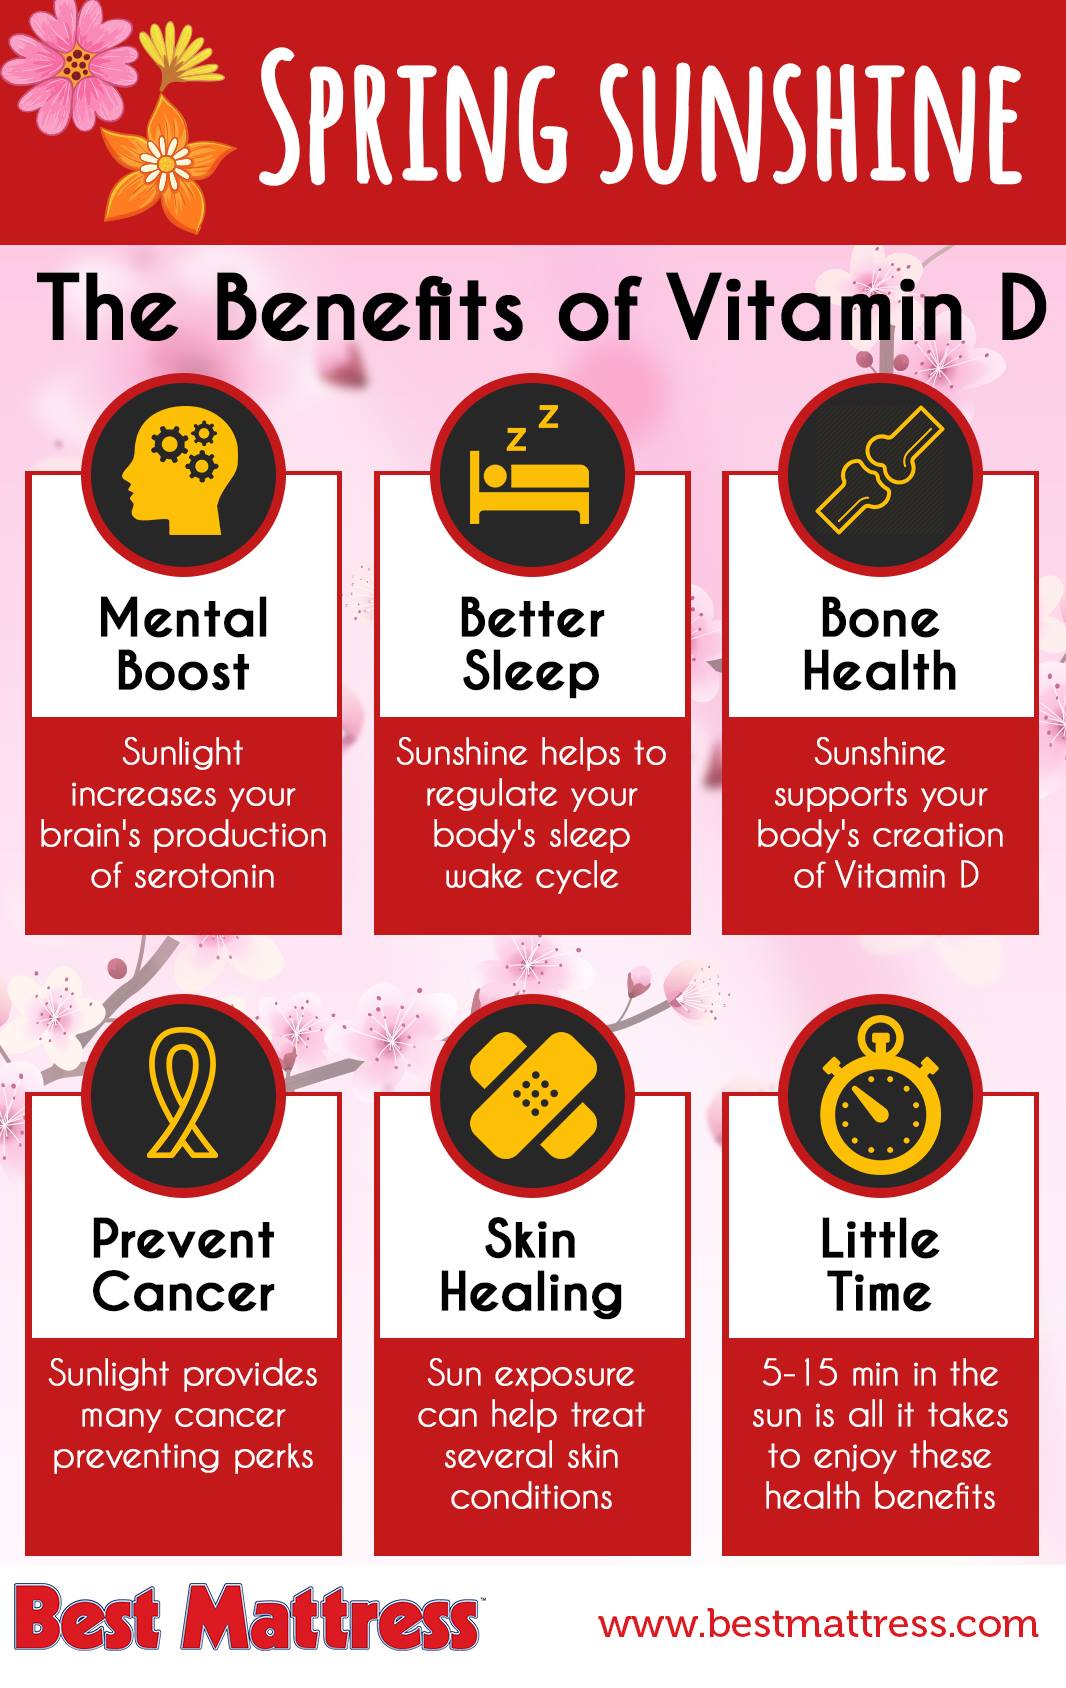 Spring Sunshine: Benefits of Vitamin D infographic